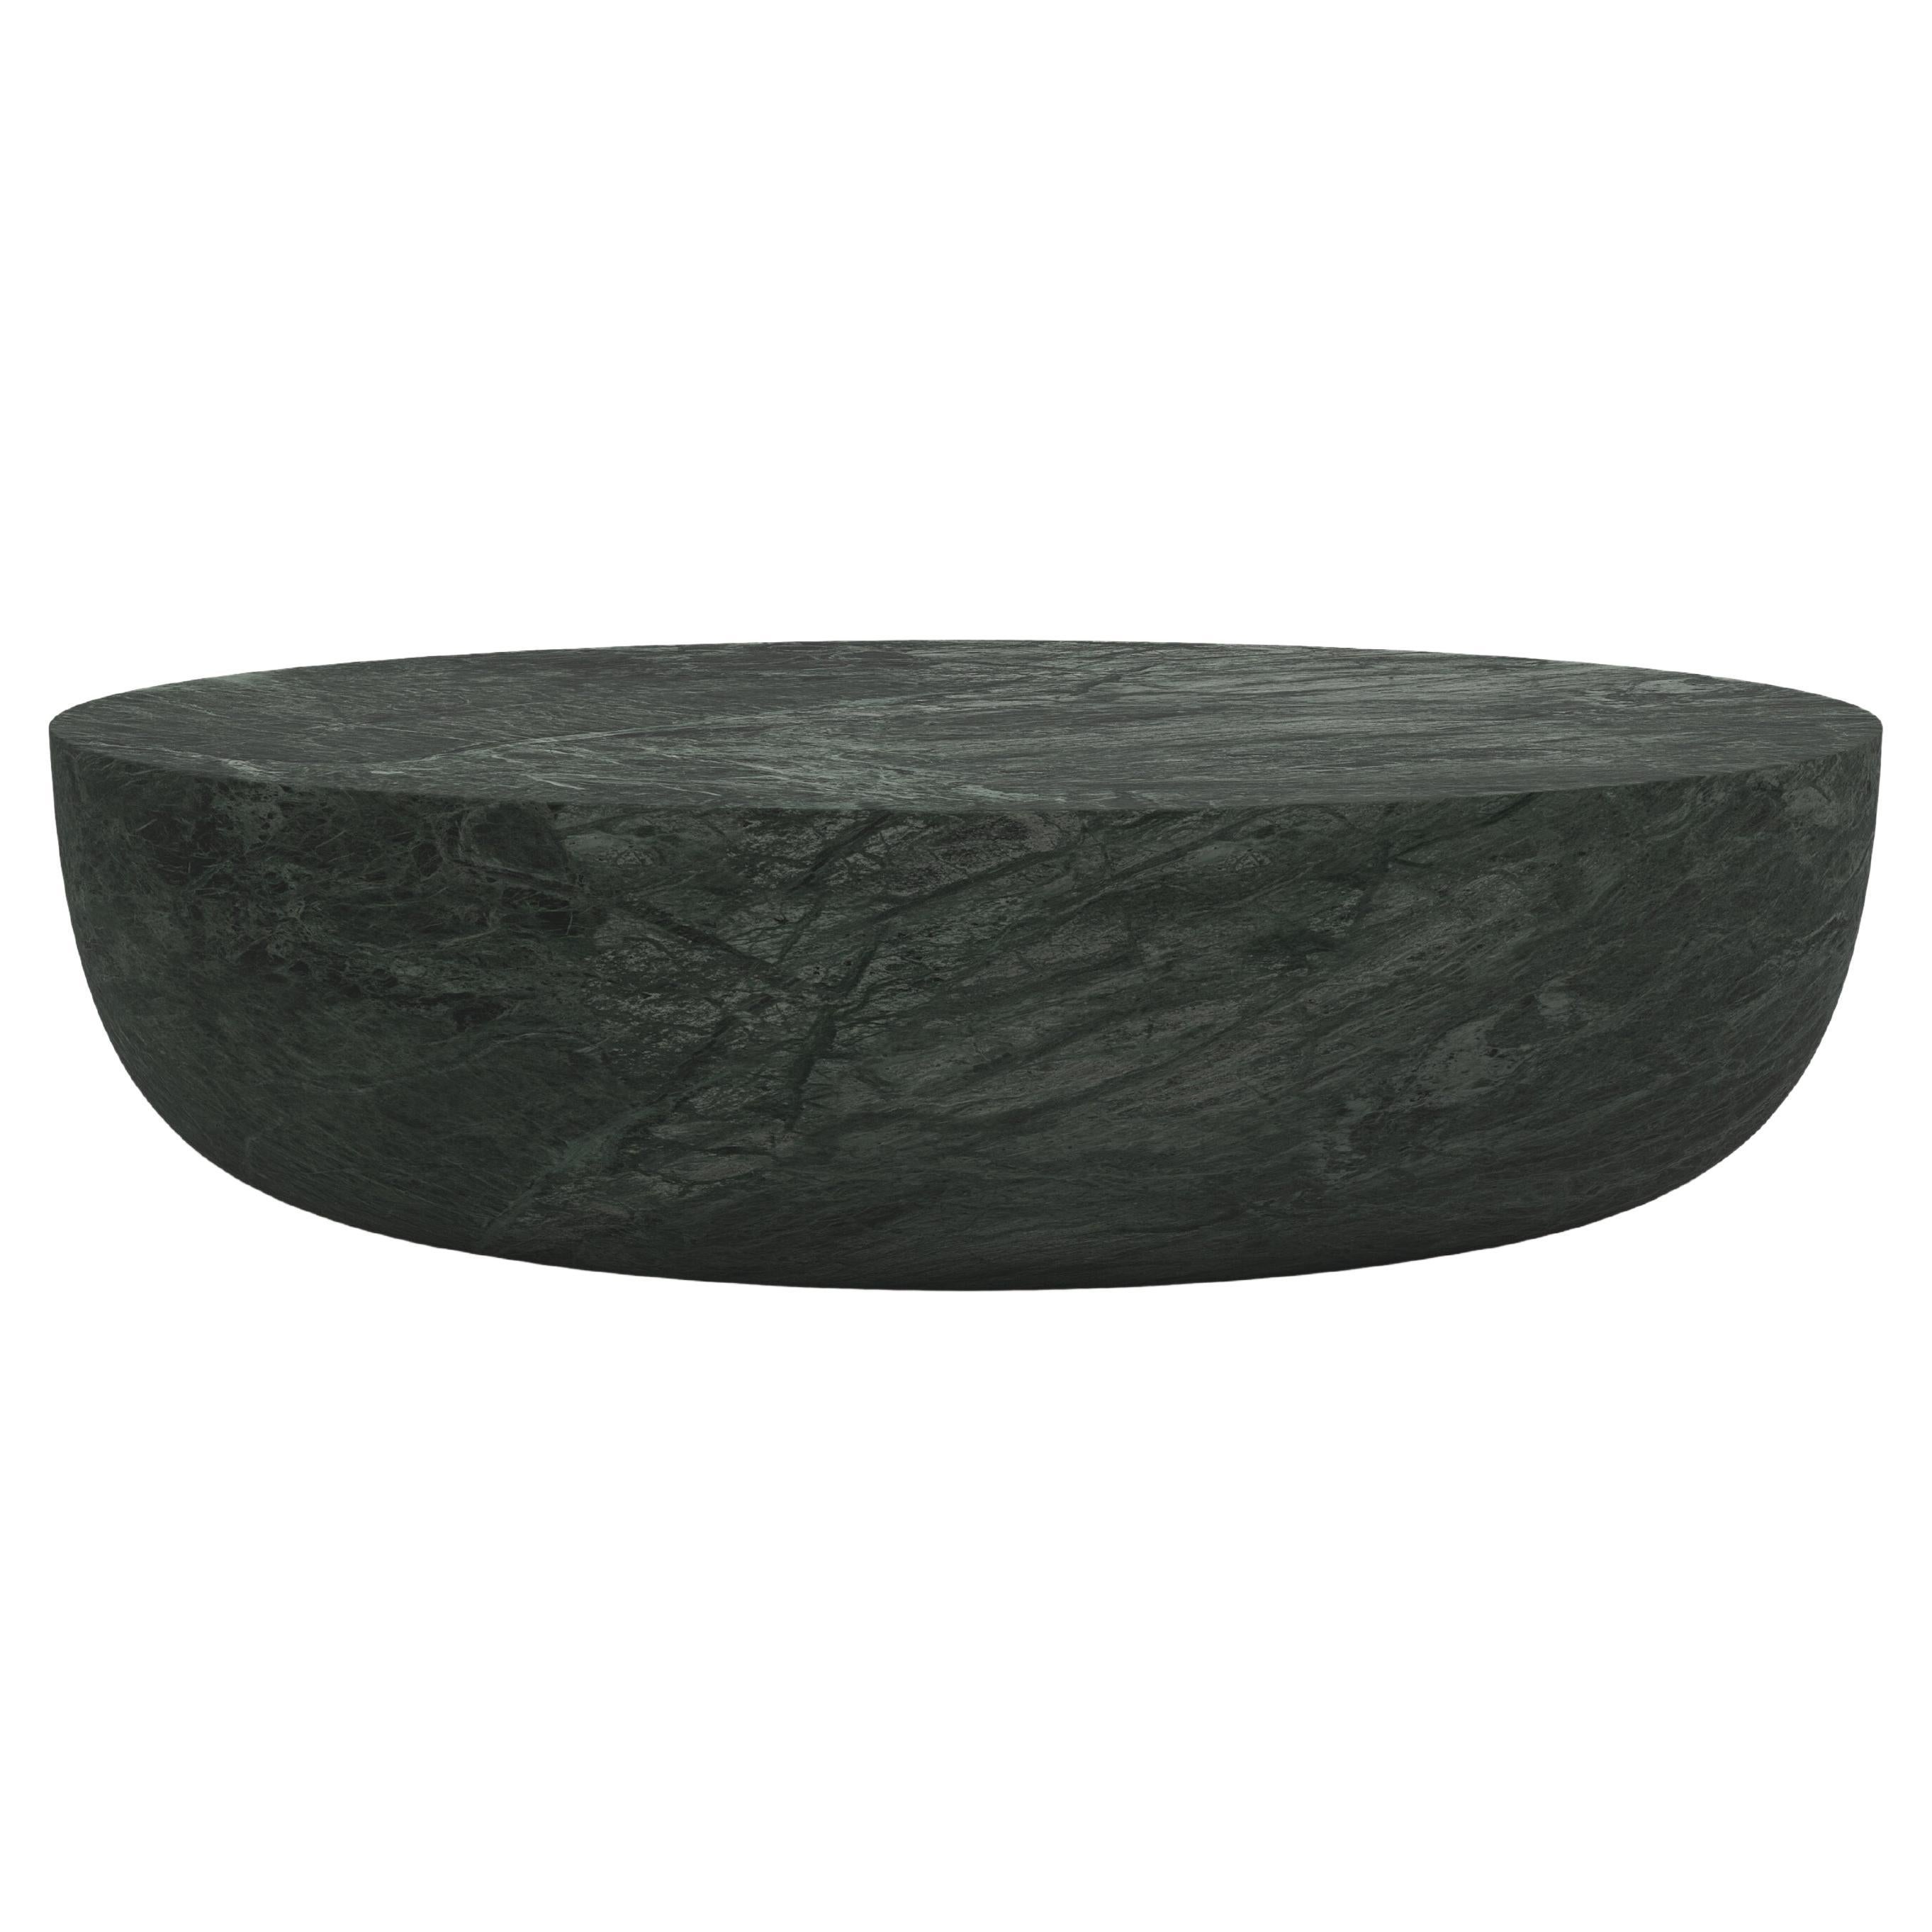 FORM(LA) Sfera Oval Coffee Table 60”L x 42”W x 16”H Verde Guatemala Marble